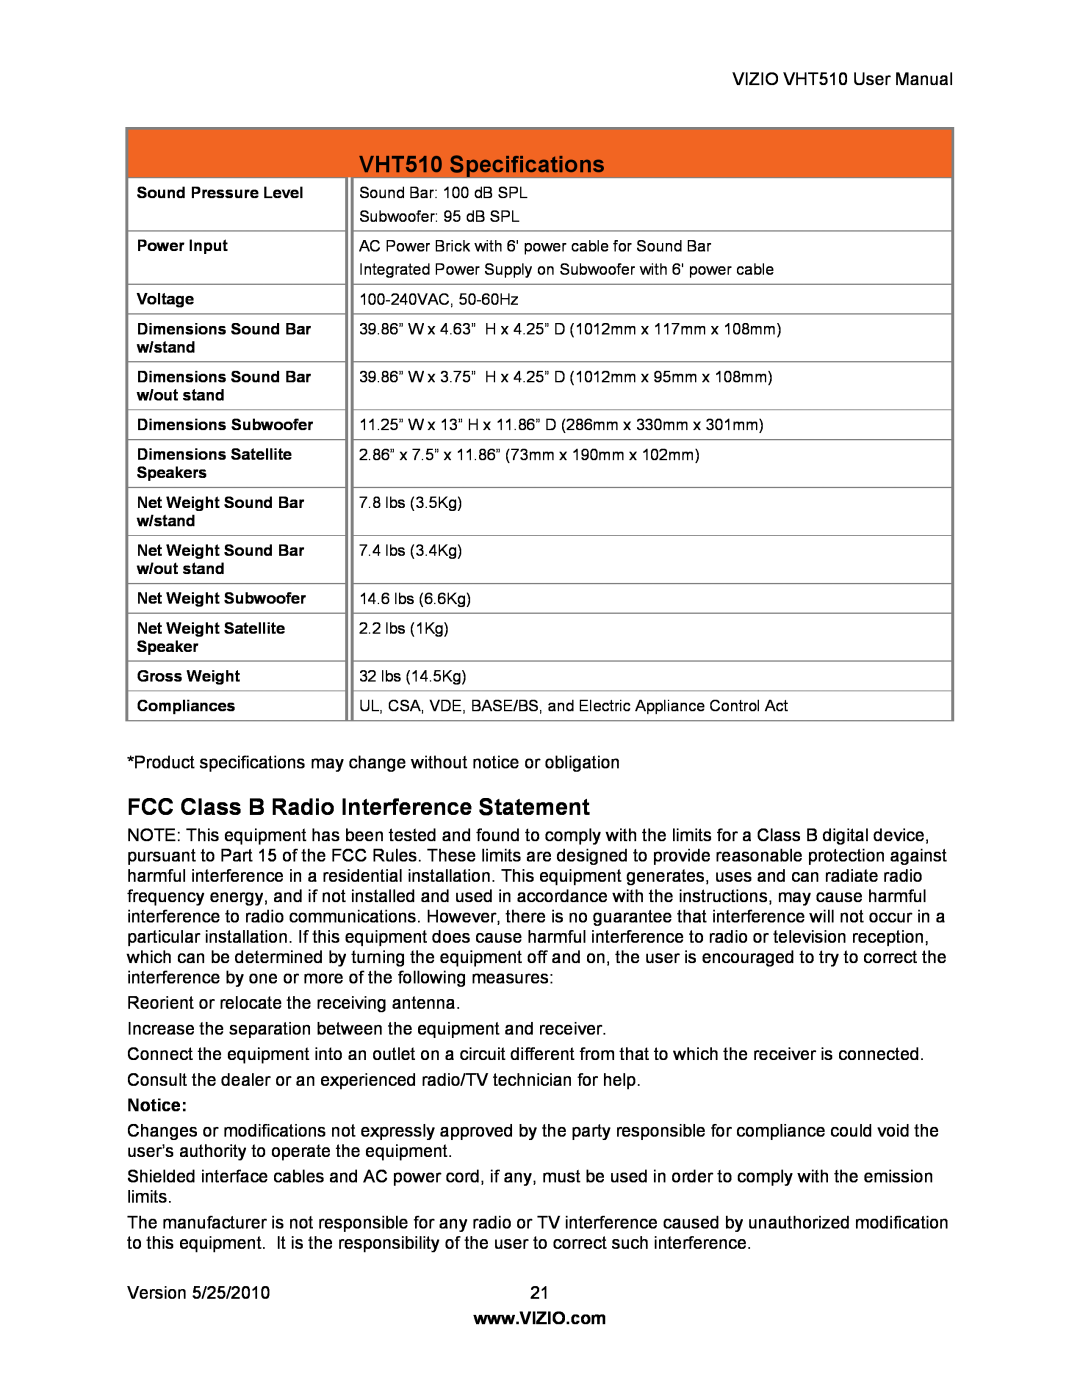 Vizio user manual FCC Class B Radio Interference Statement, VHT510 Specifications 